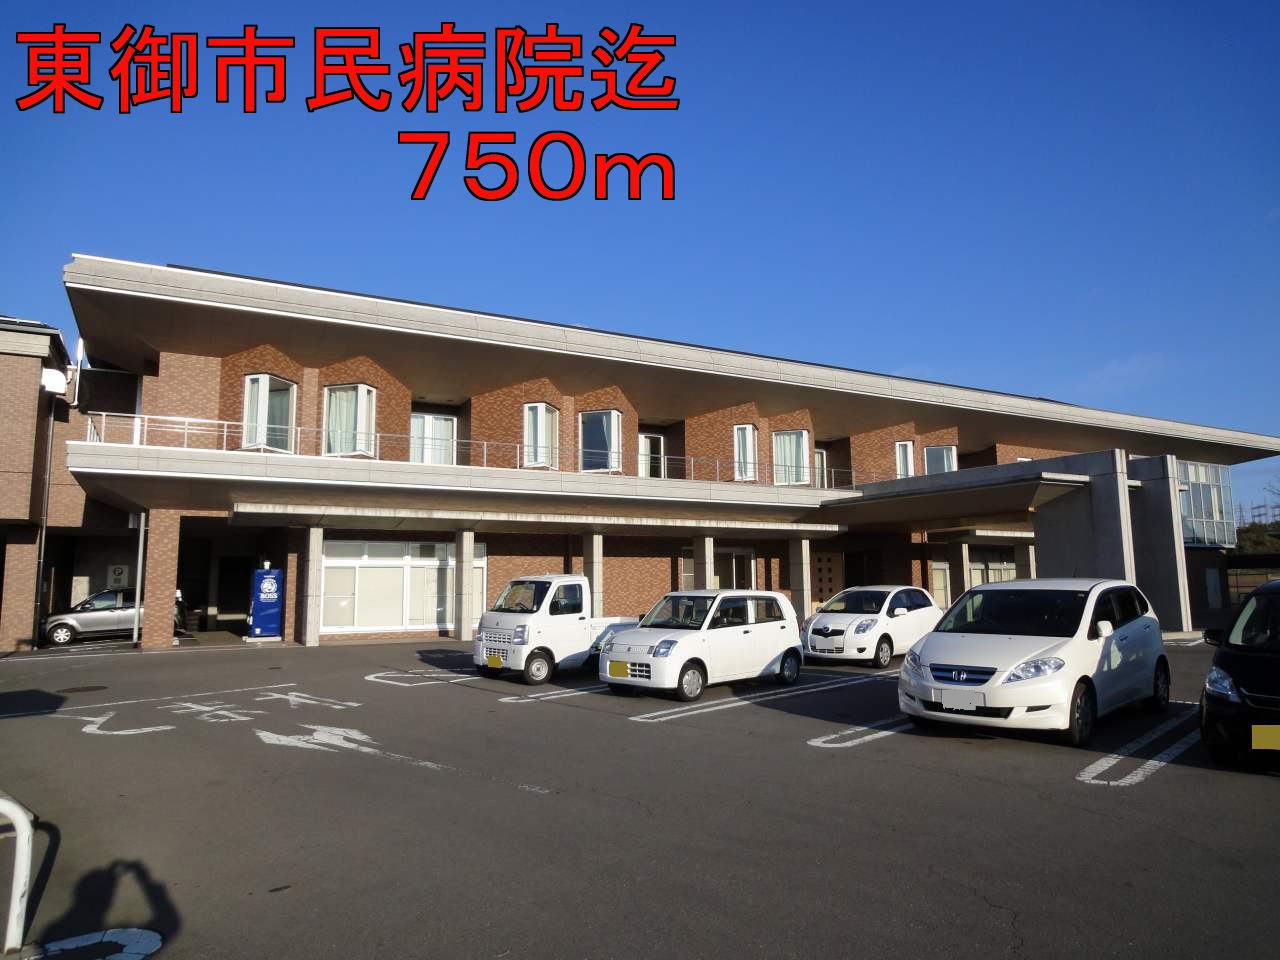 Hospital. Tomi City Hospital (hospital) to 750m